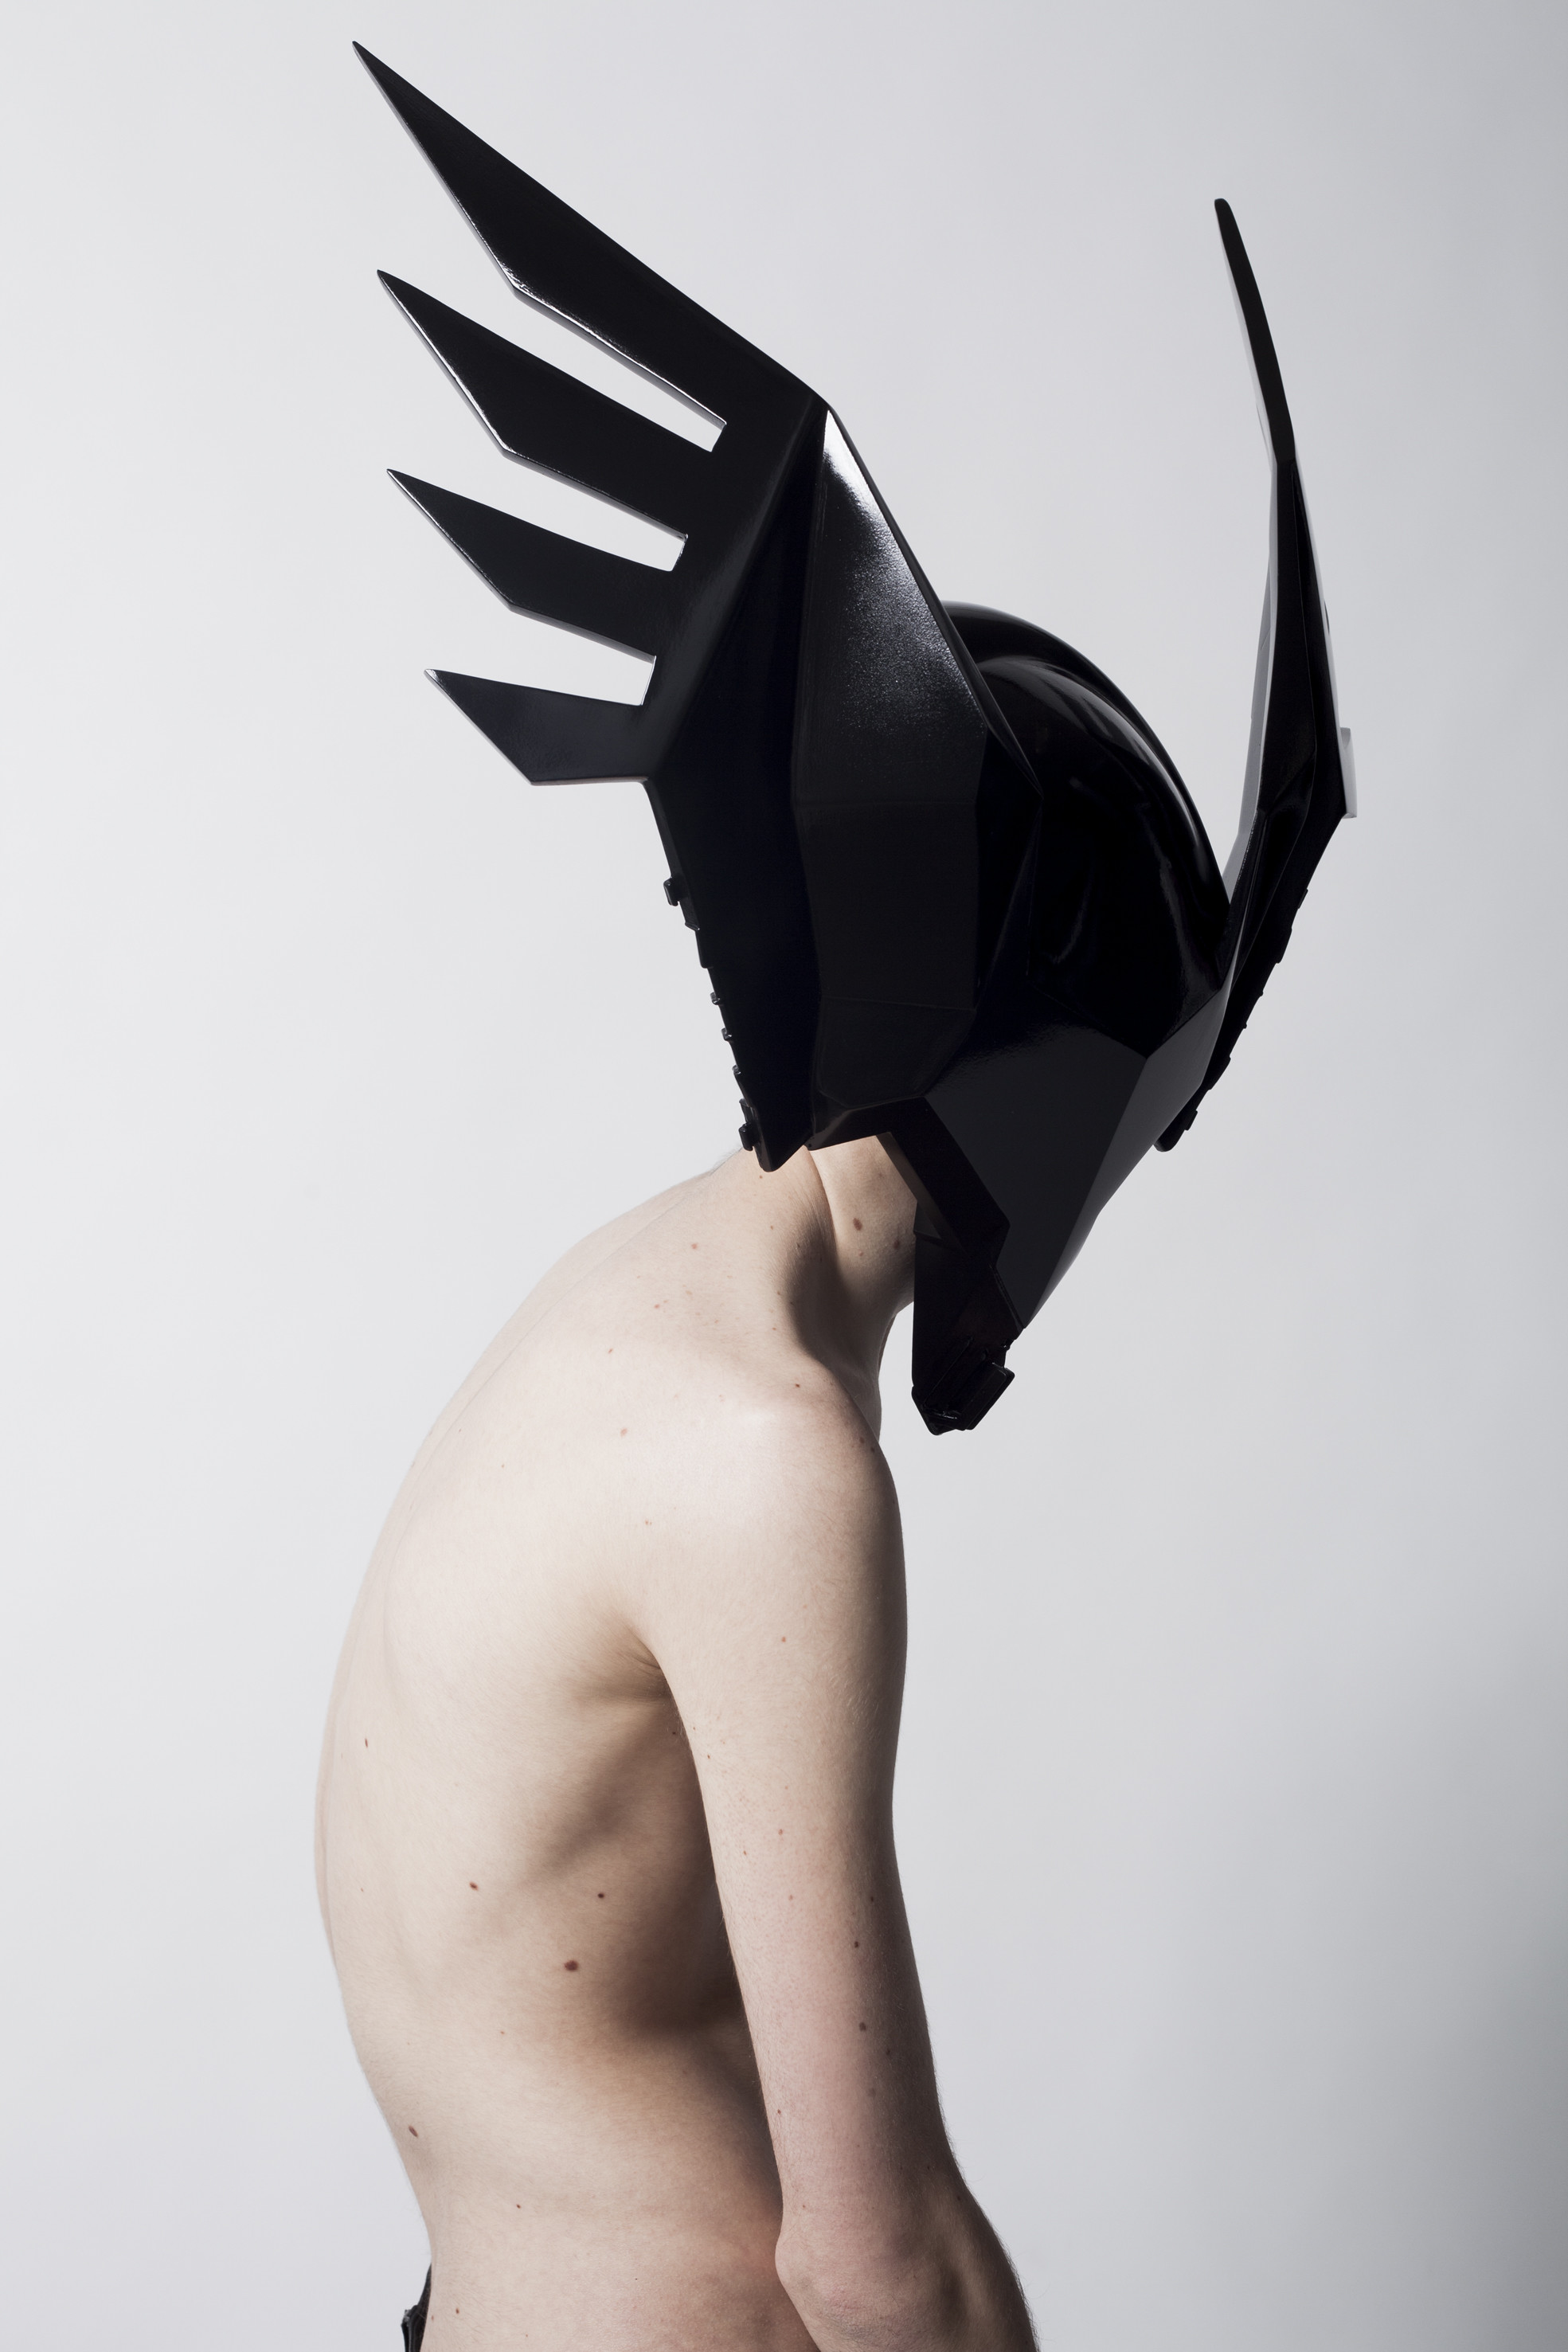 Rein Vollenga, NL, Untitled (Wings), 2013, Foto Jonas Lindström
